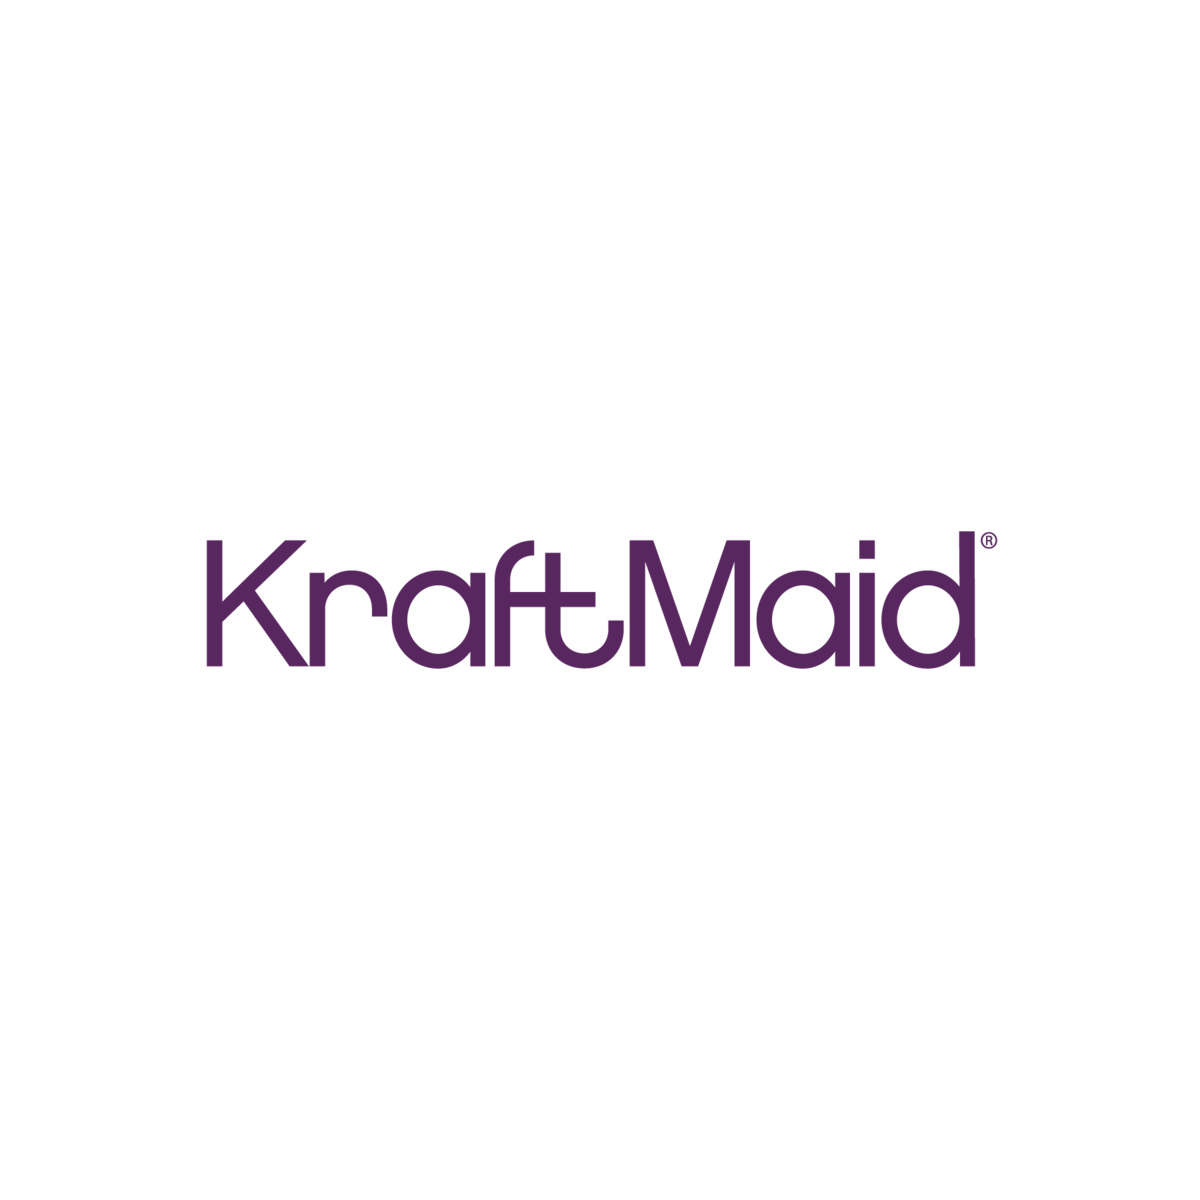 KraftMaid Logo - KraftMaid - Kraftmaid - Brand - Young & Laramore Advertising